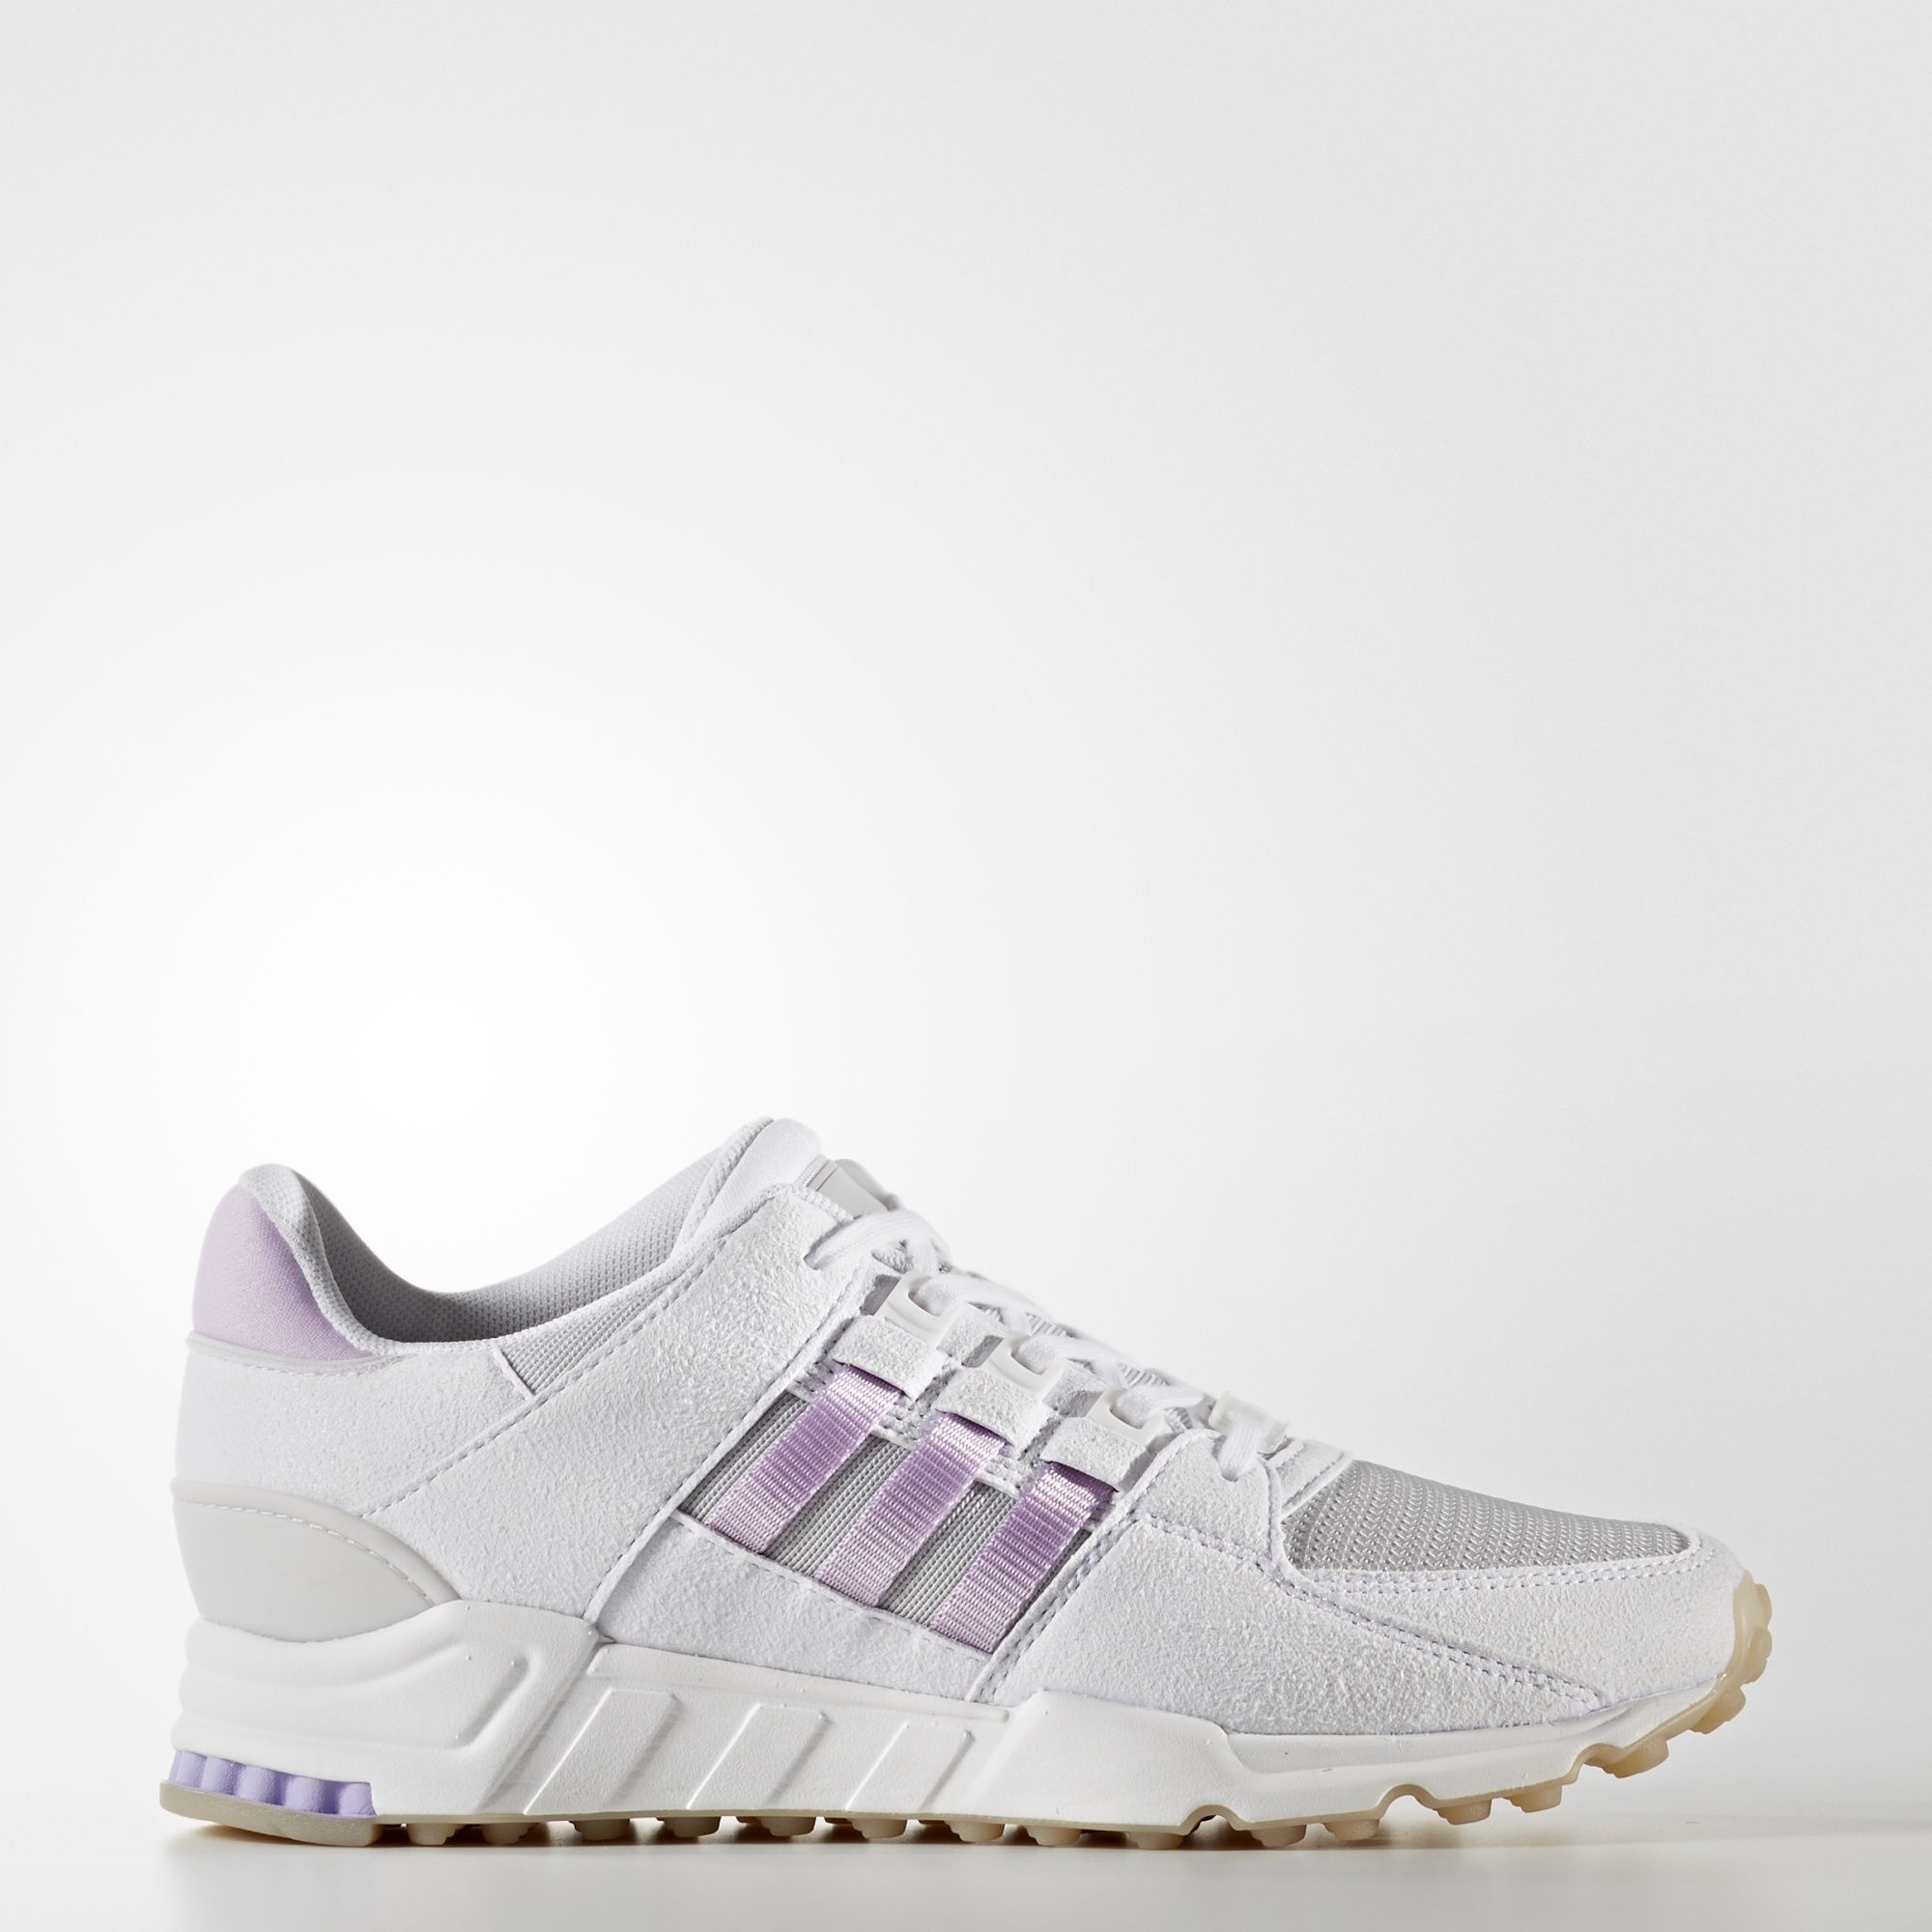 Adidas W EQT Support RF
White / Purple Glow